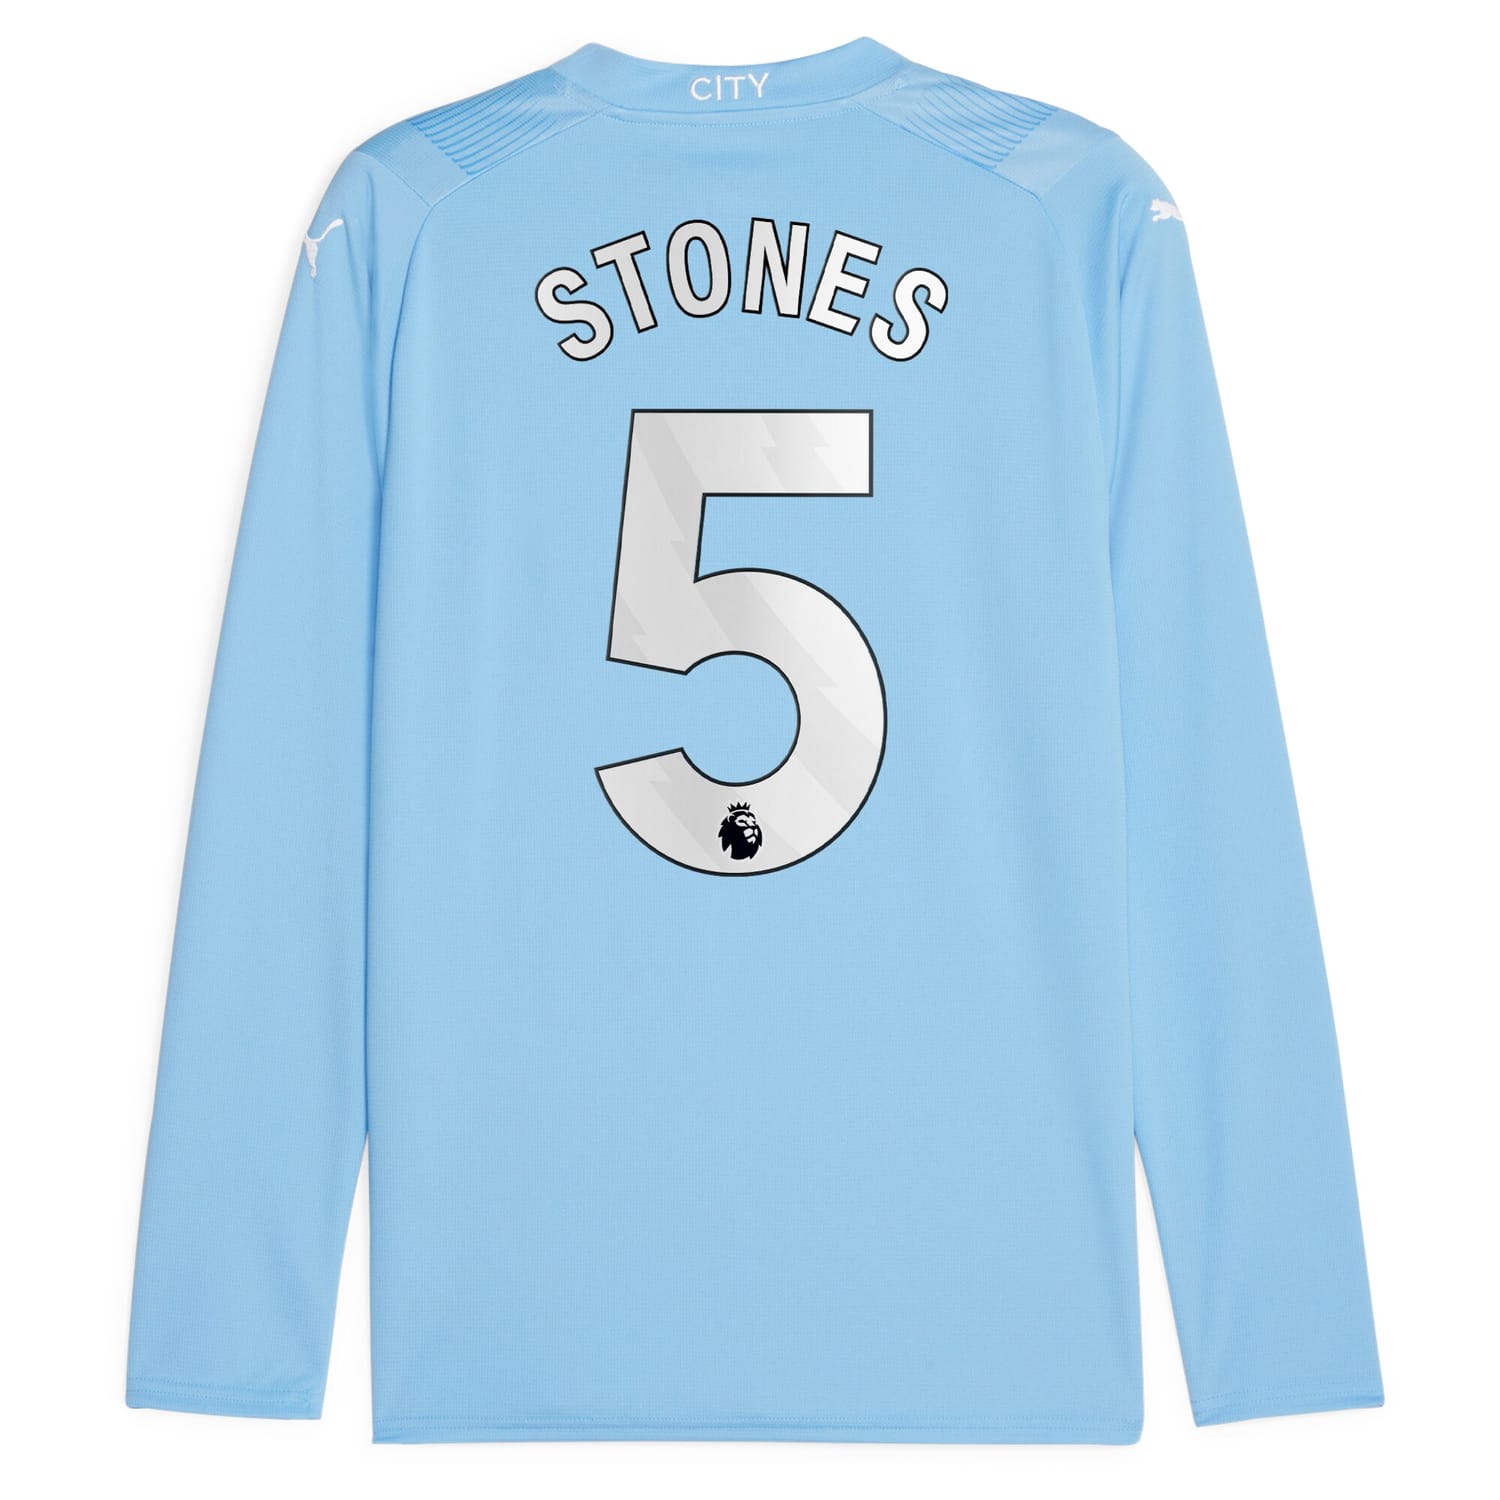 Premier League Manchester City Home Jersey Shirt Long Sleeve 2023-24 player John Stones 5 printing for Men